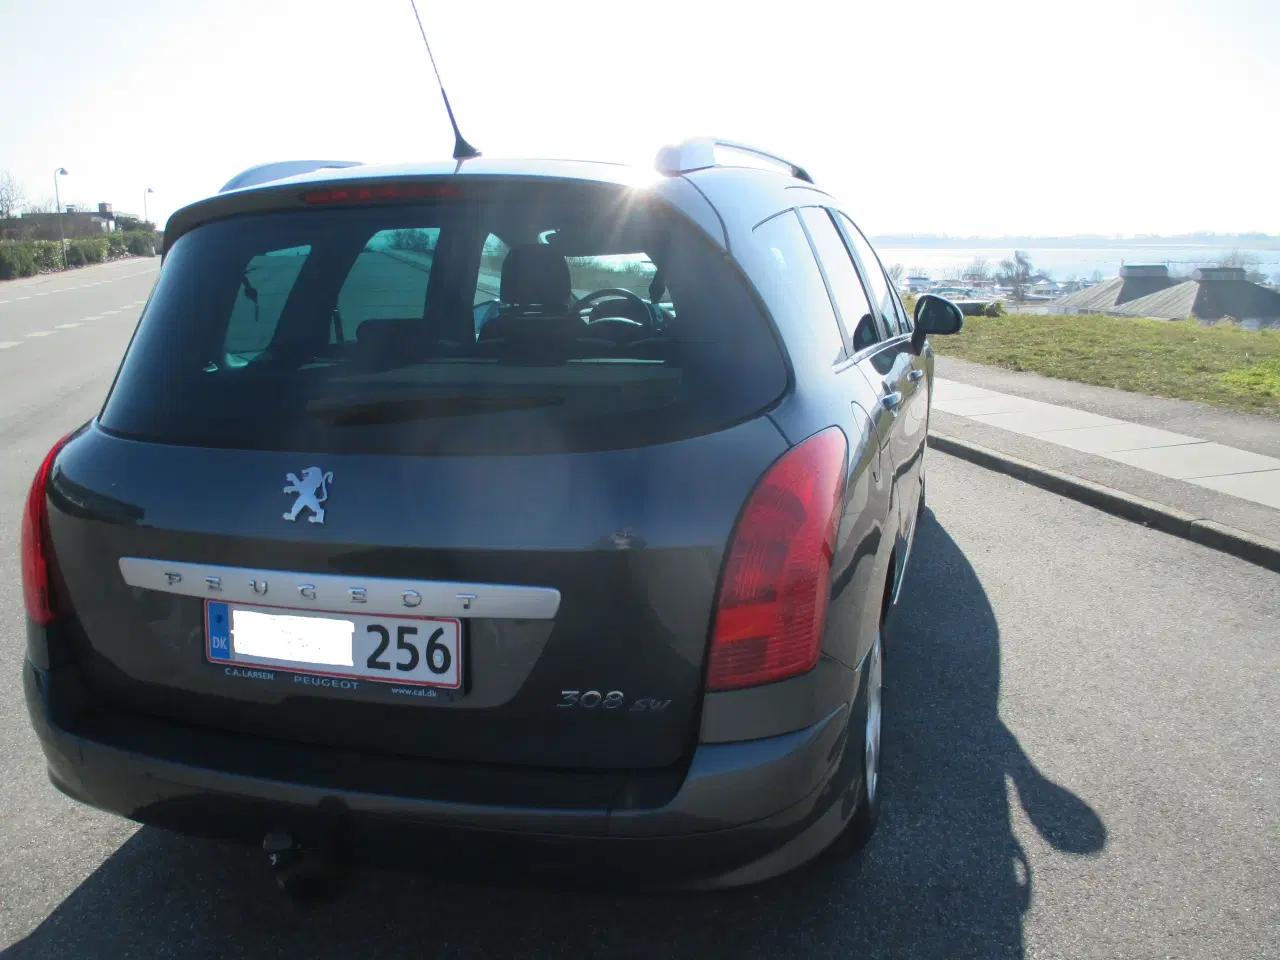 Billede 5 - Peugeot 308 1,6 HDI 109 hk Stationcar